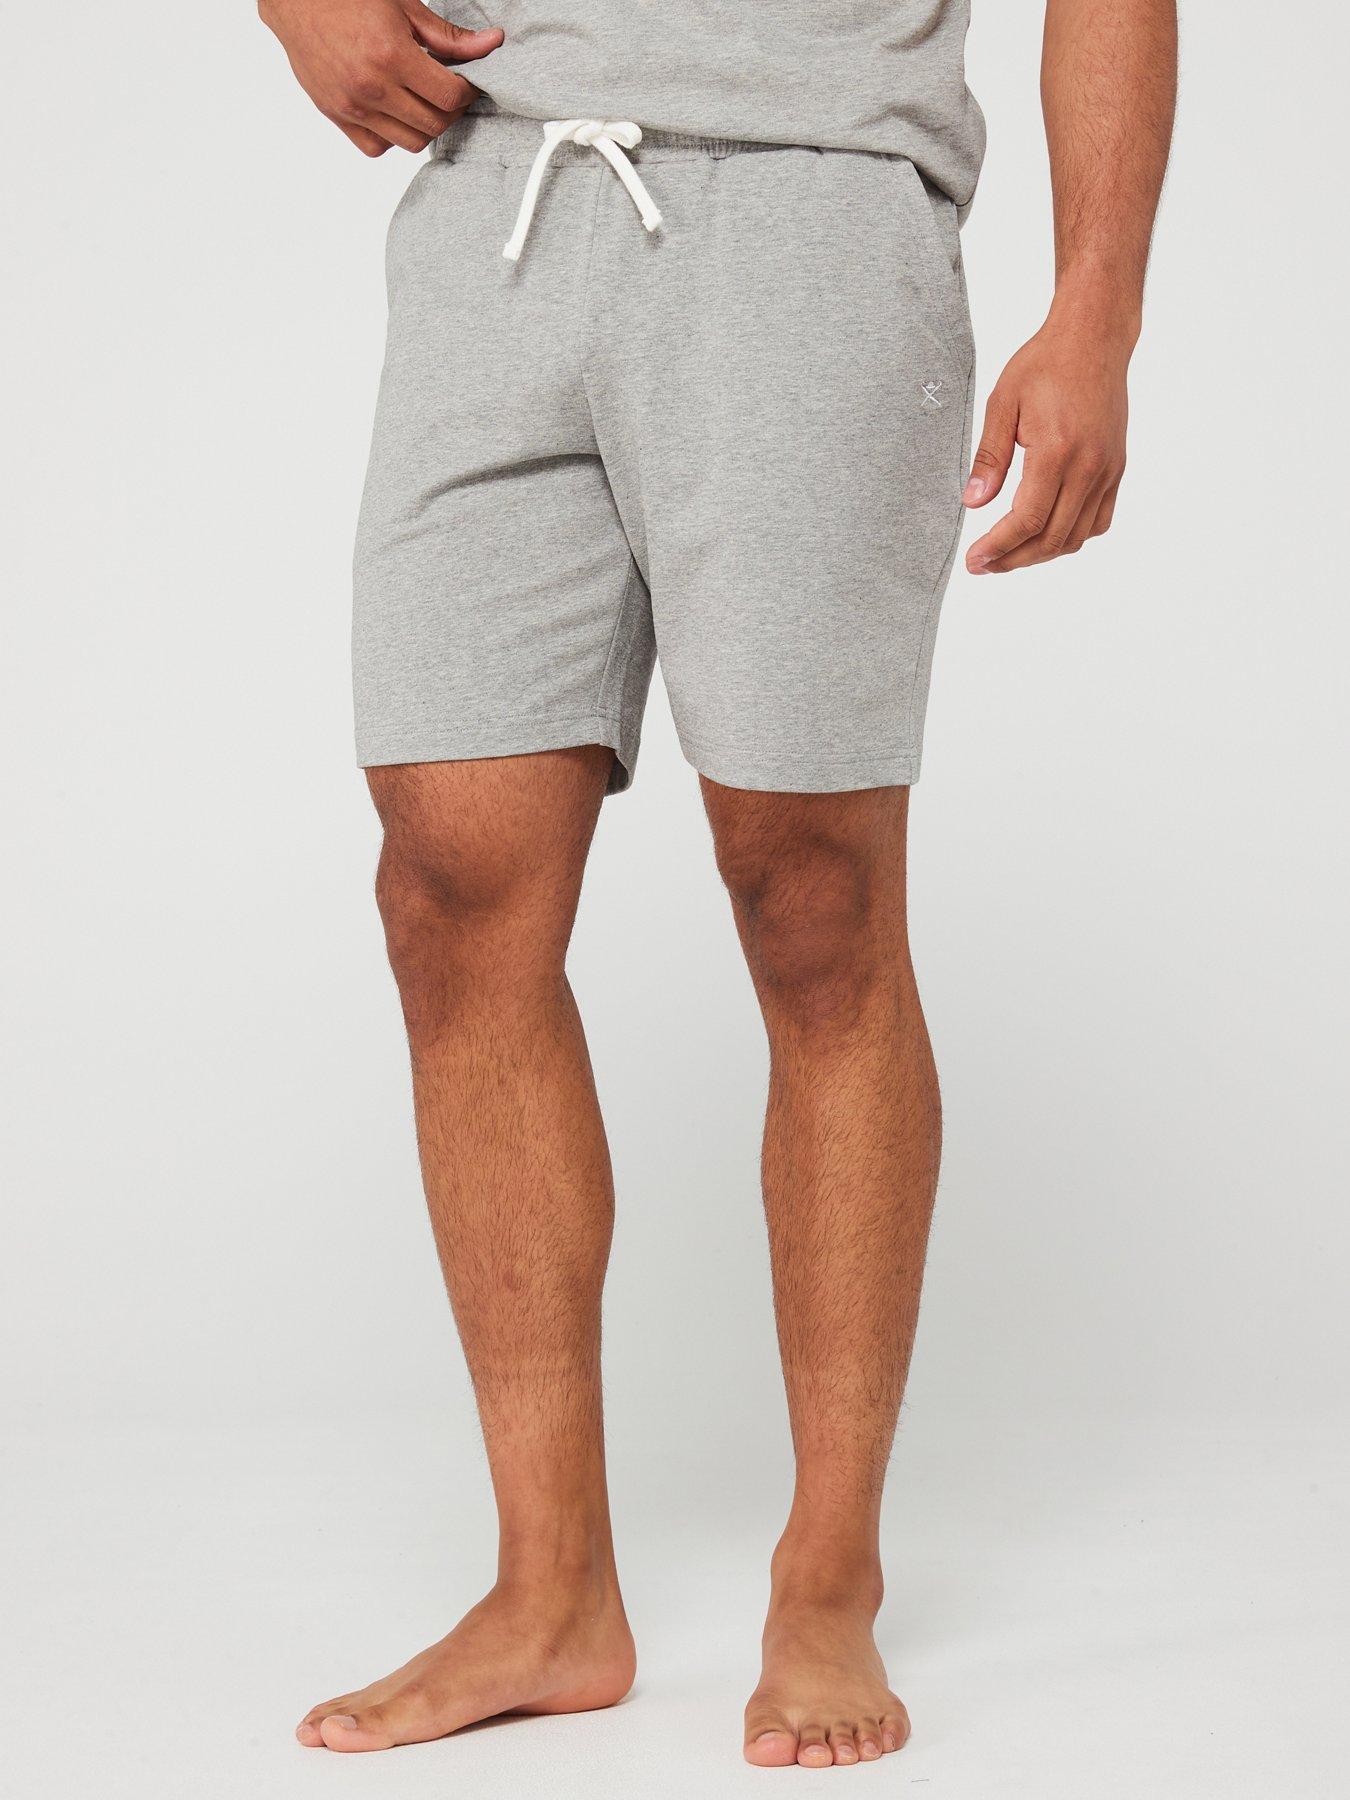 Hackett Classic Loungewear Shorts, Grey, Size M, Men